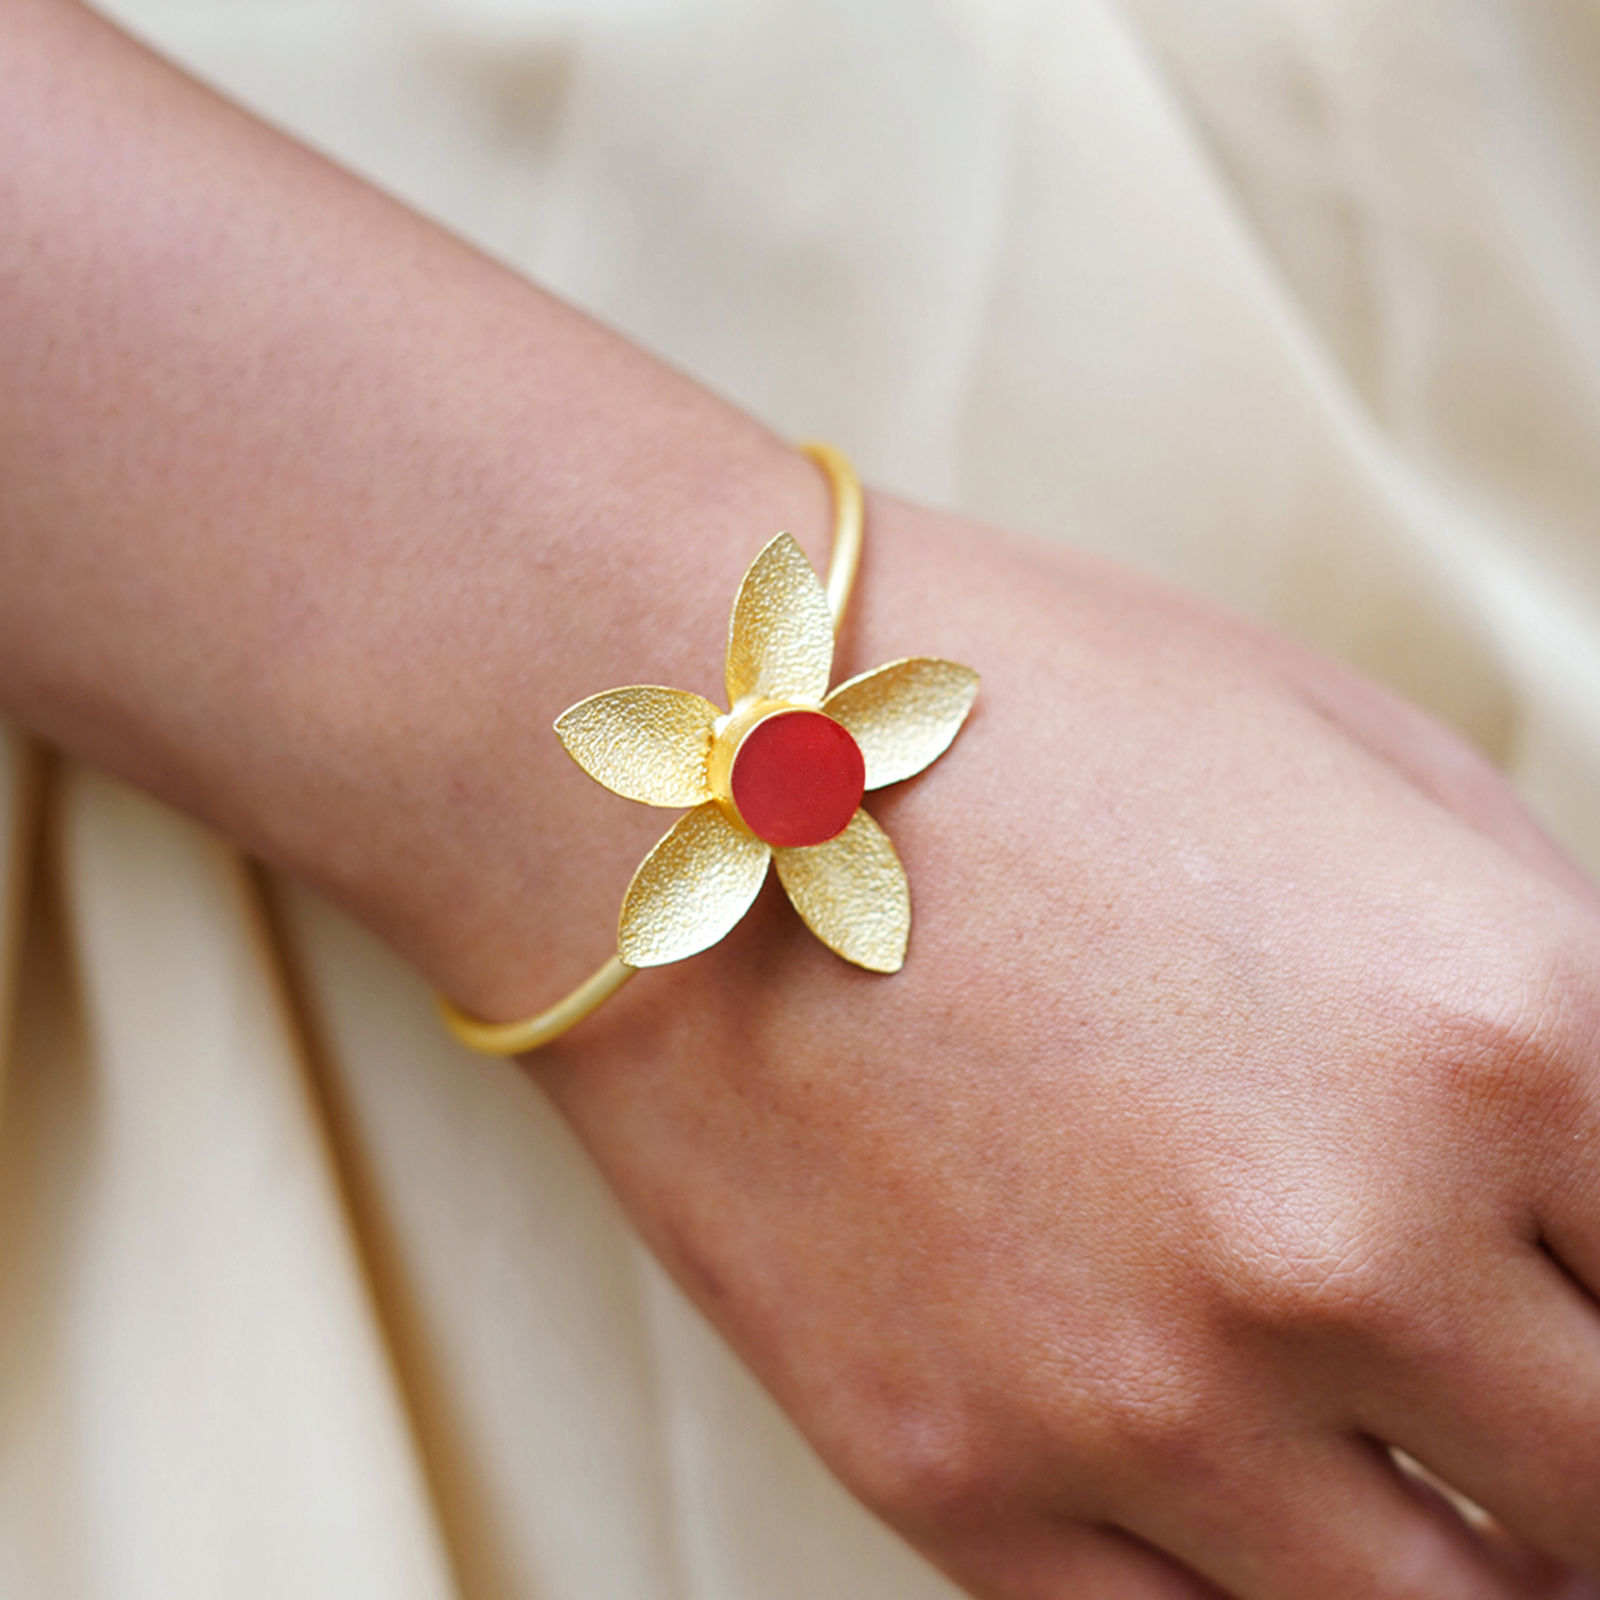 Handmade Flower Bracelet Ideas  How To Make Macrame Bracelets At Home   DIY Jewelry Creationyou  YouTube